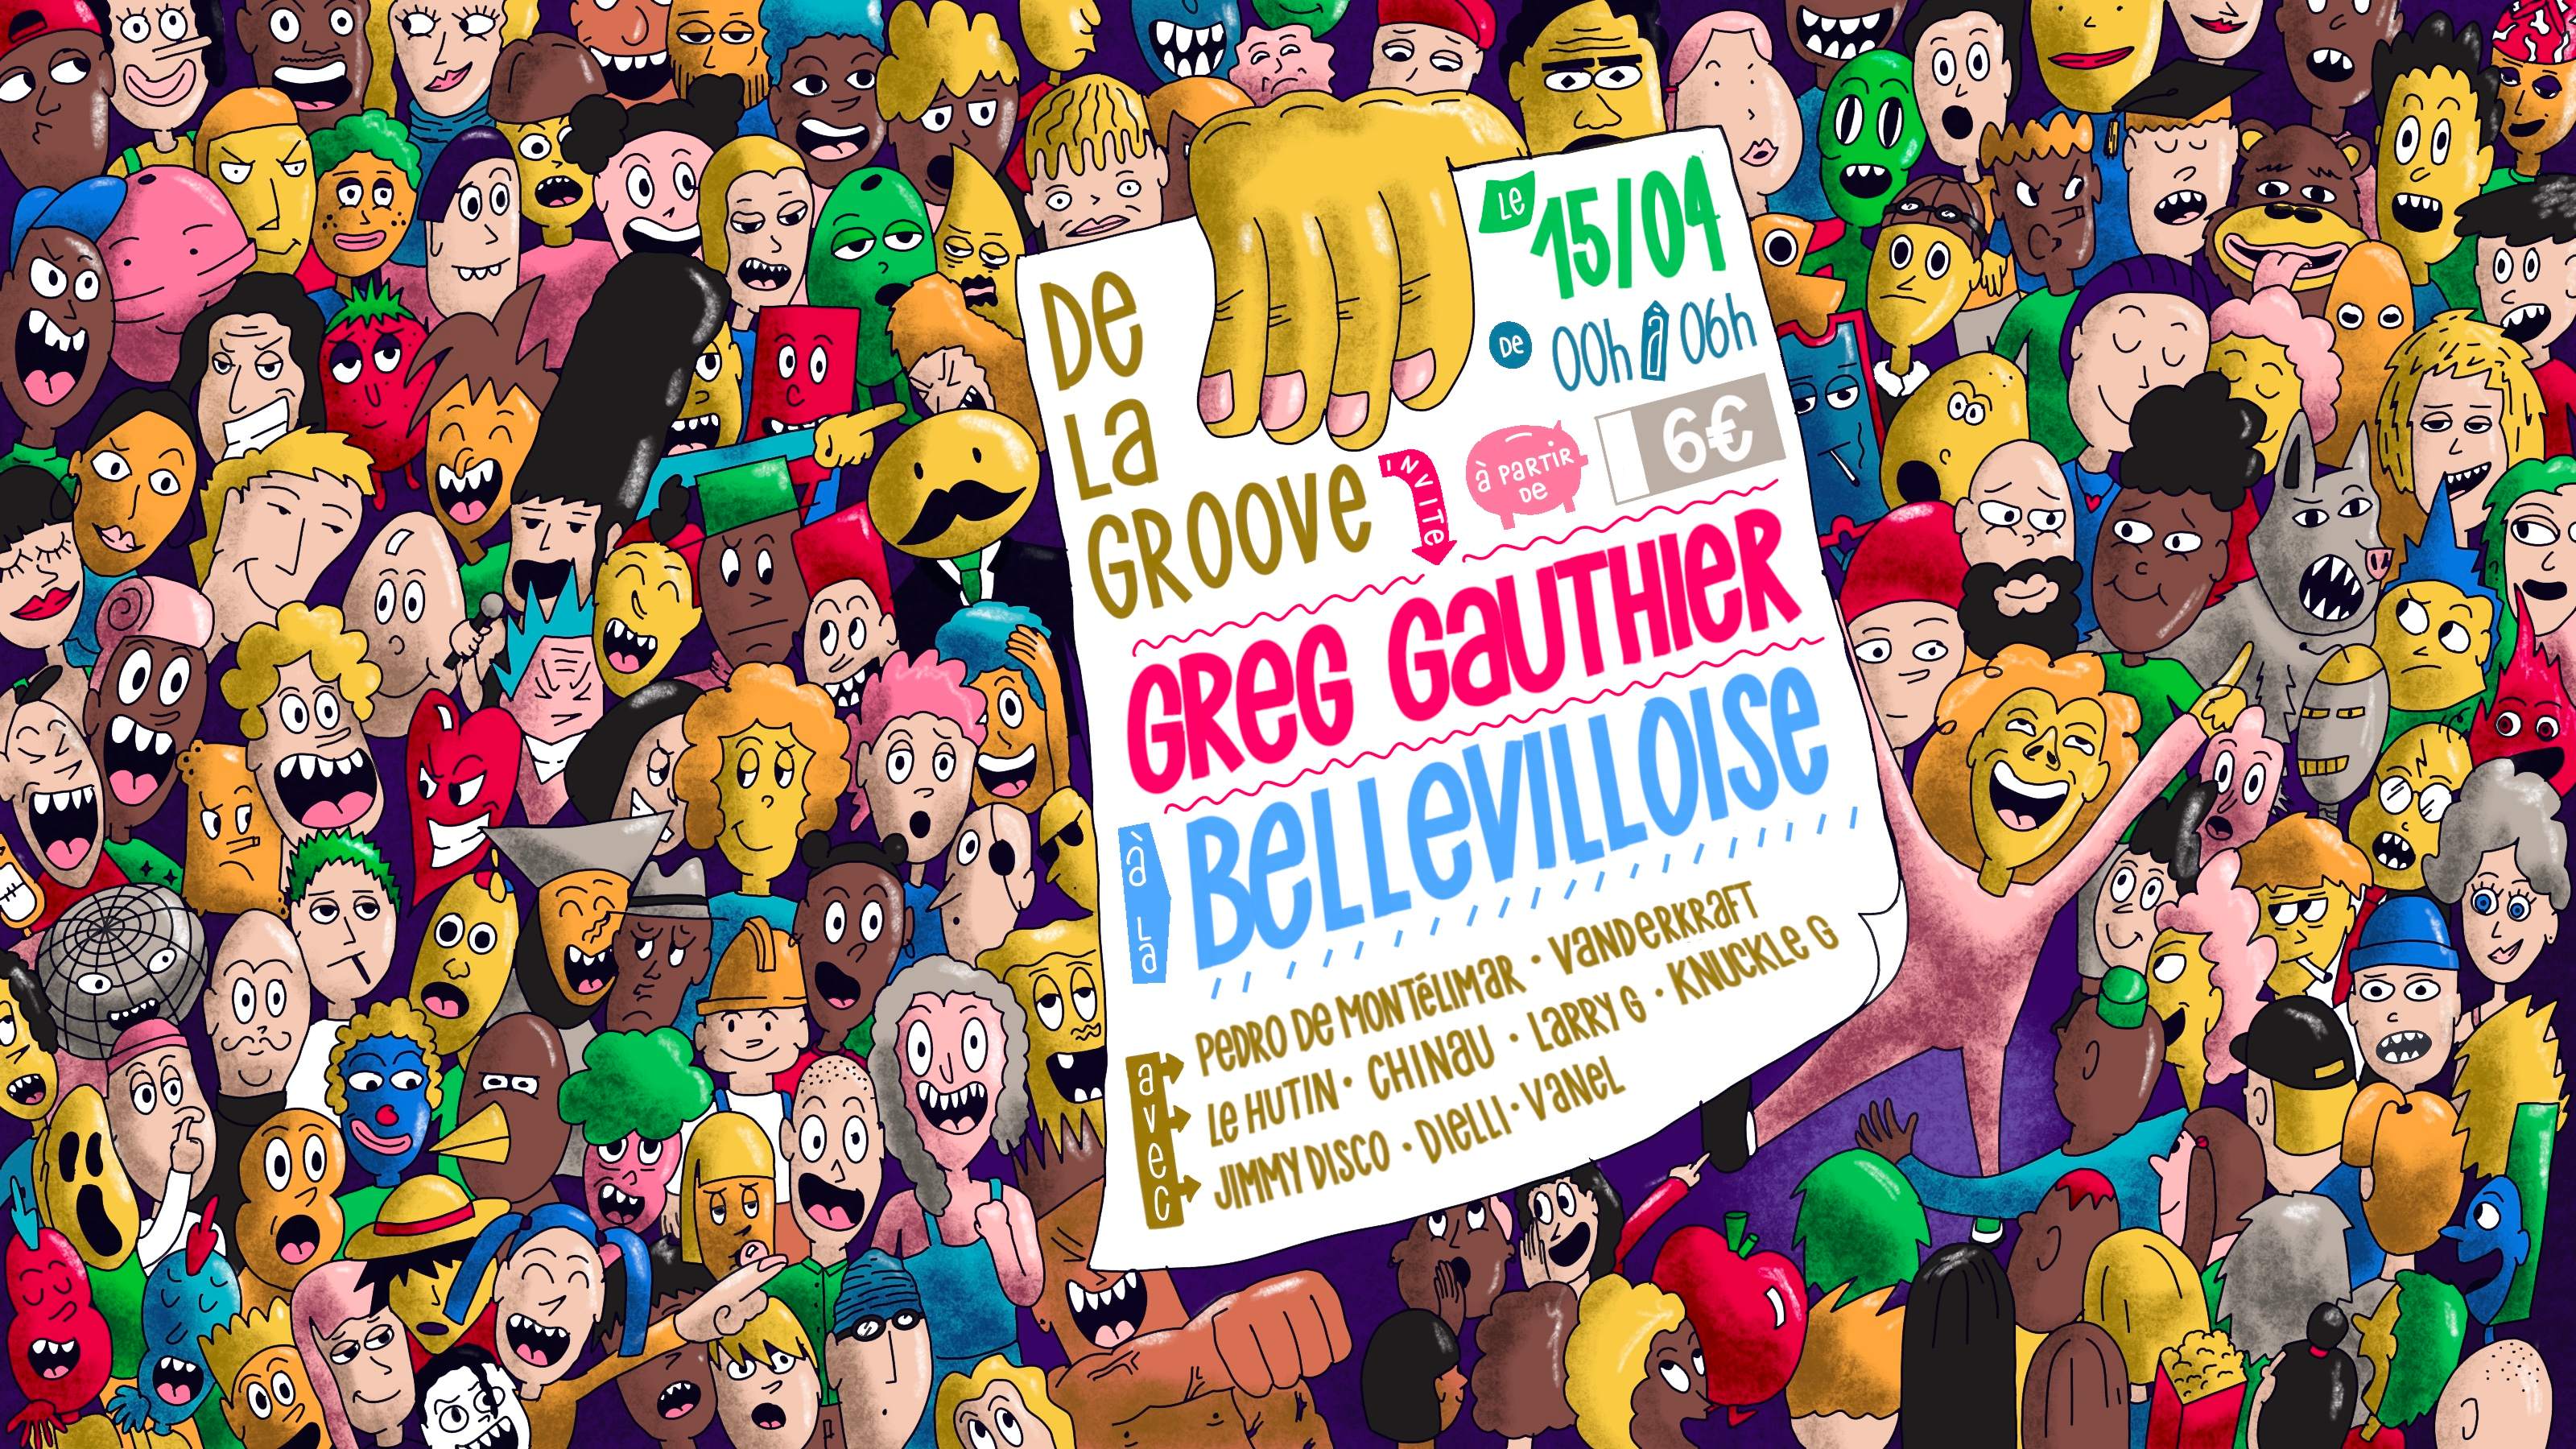 De La Groove invite Greg Gauthier | 15.04 - フライヤー表